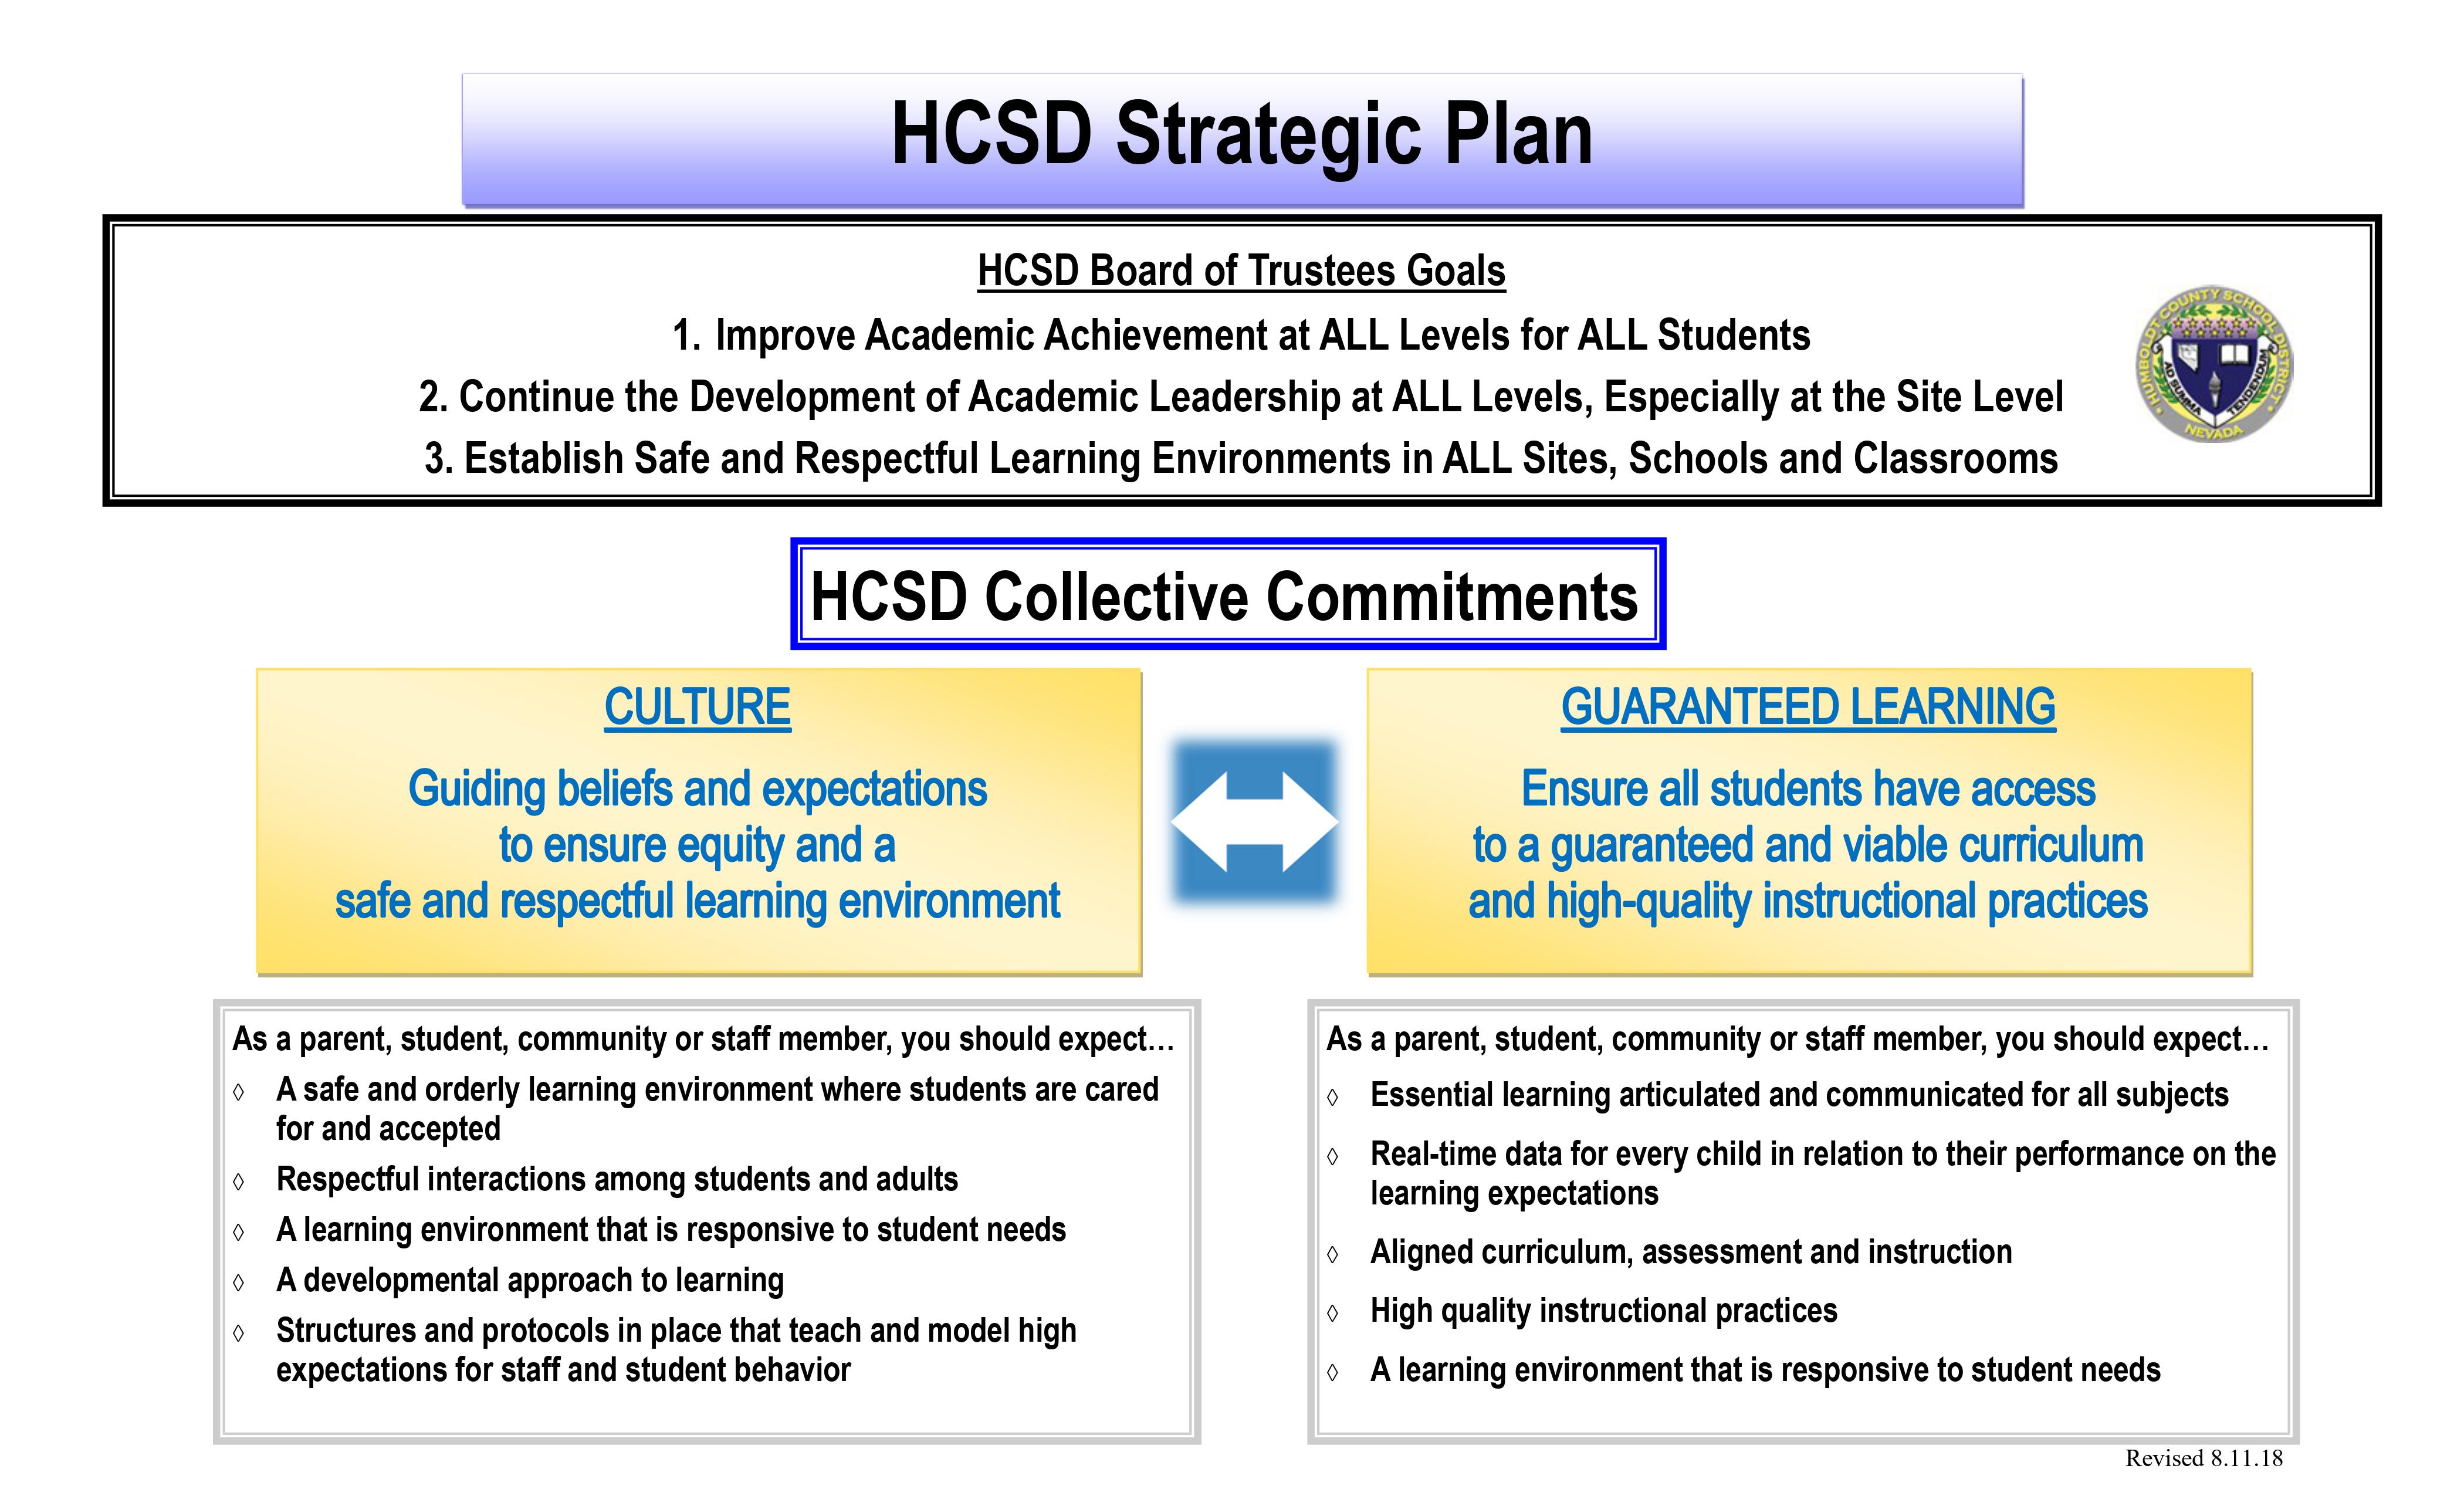 HCSD Strategic Plan